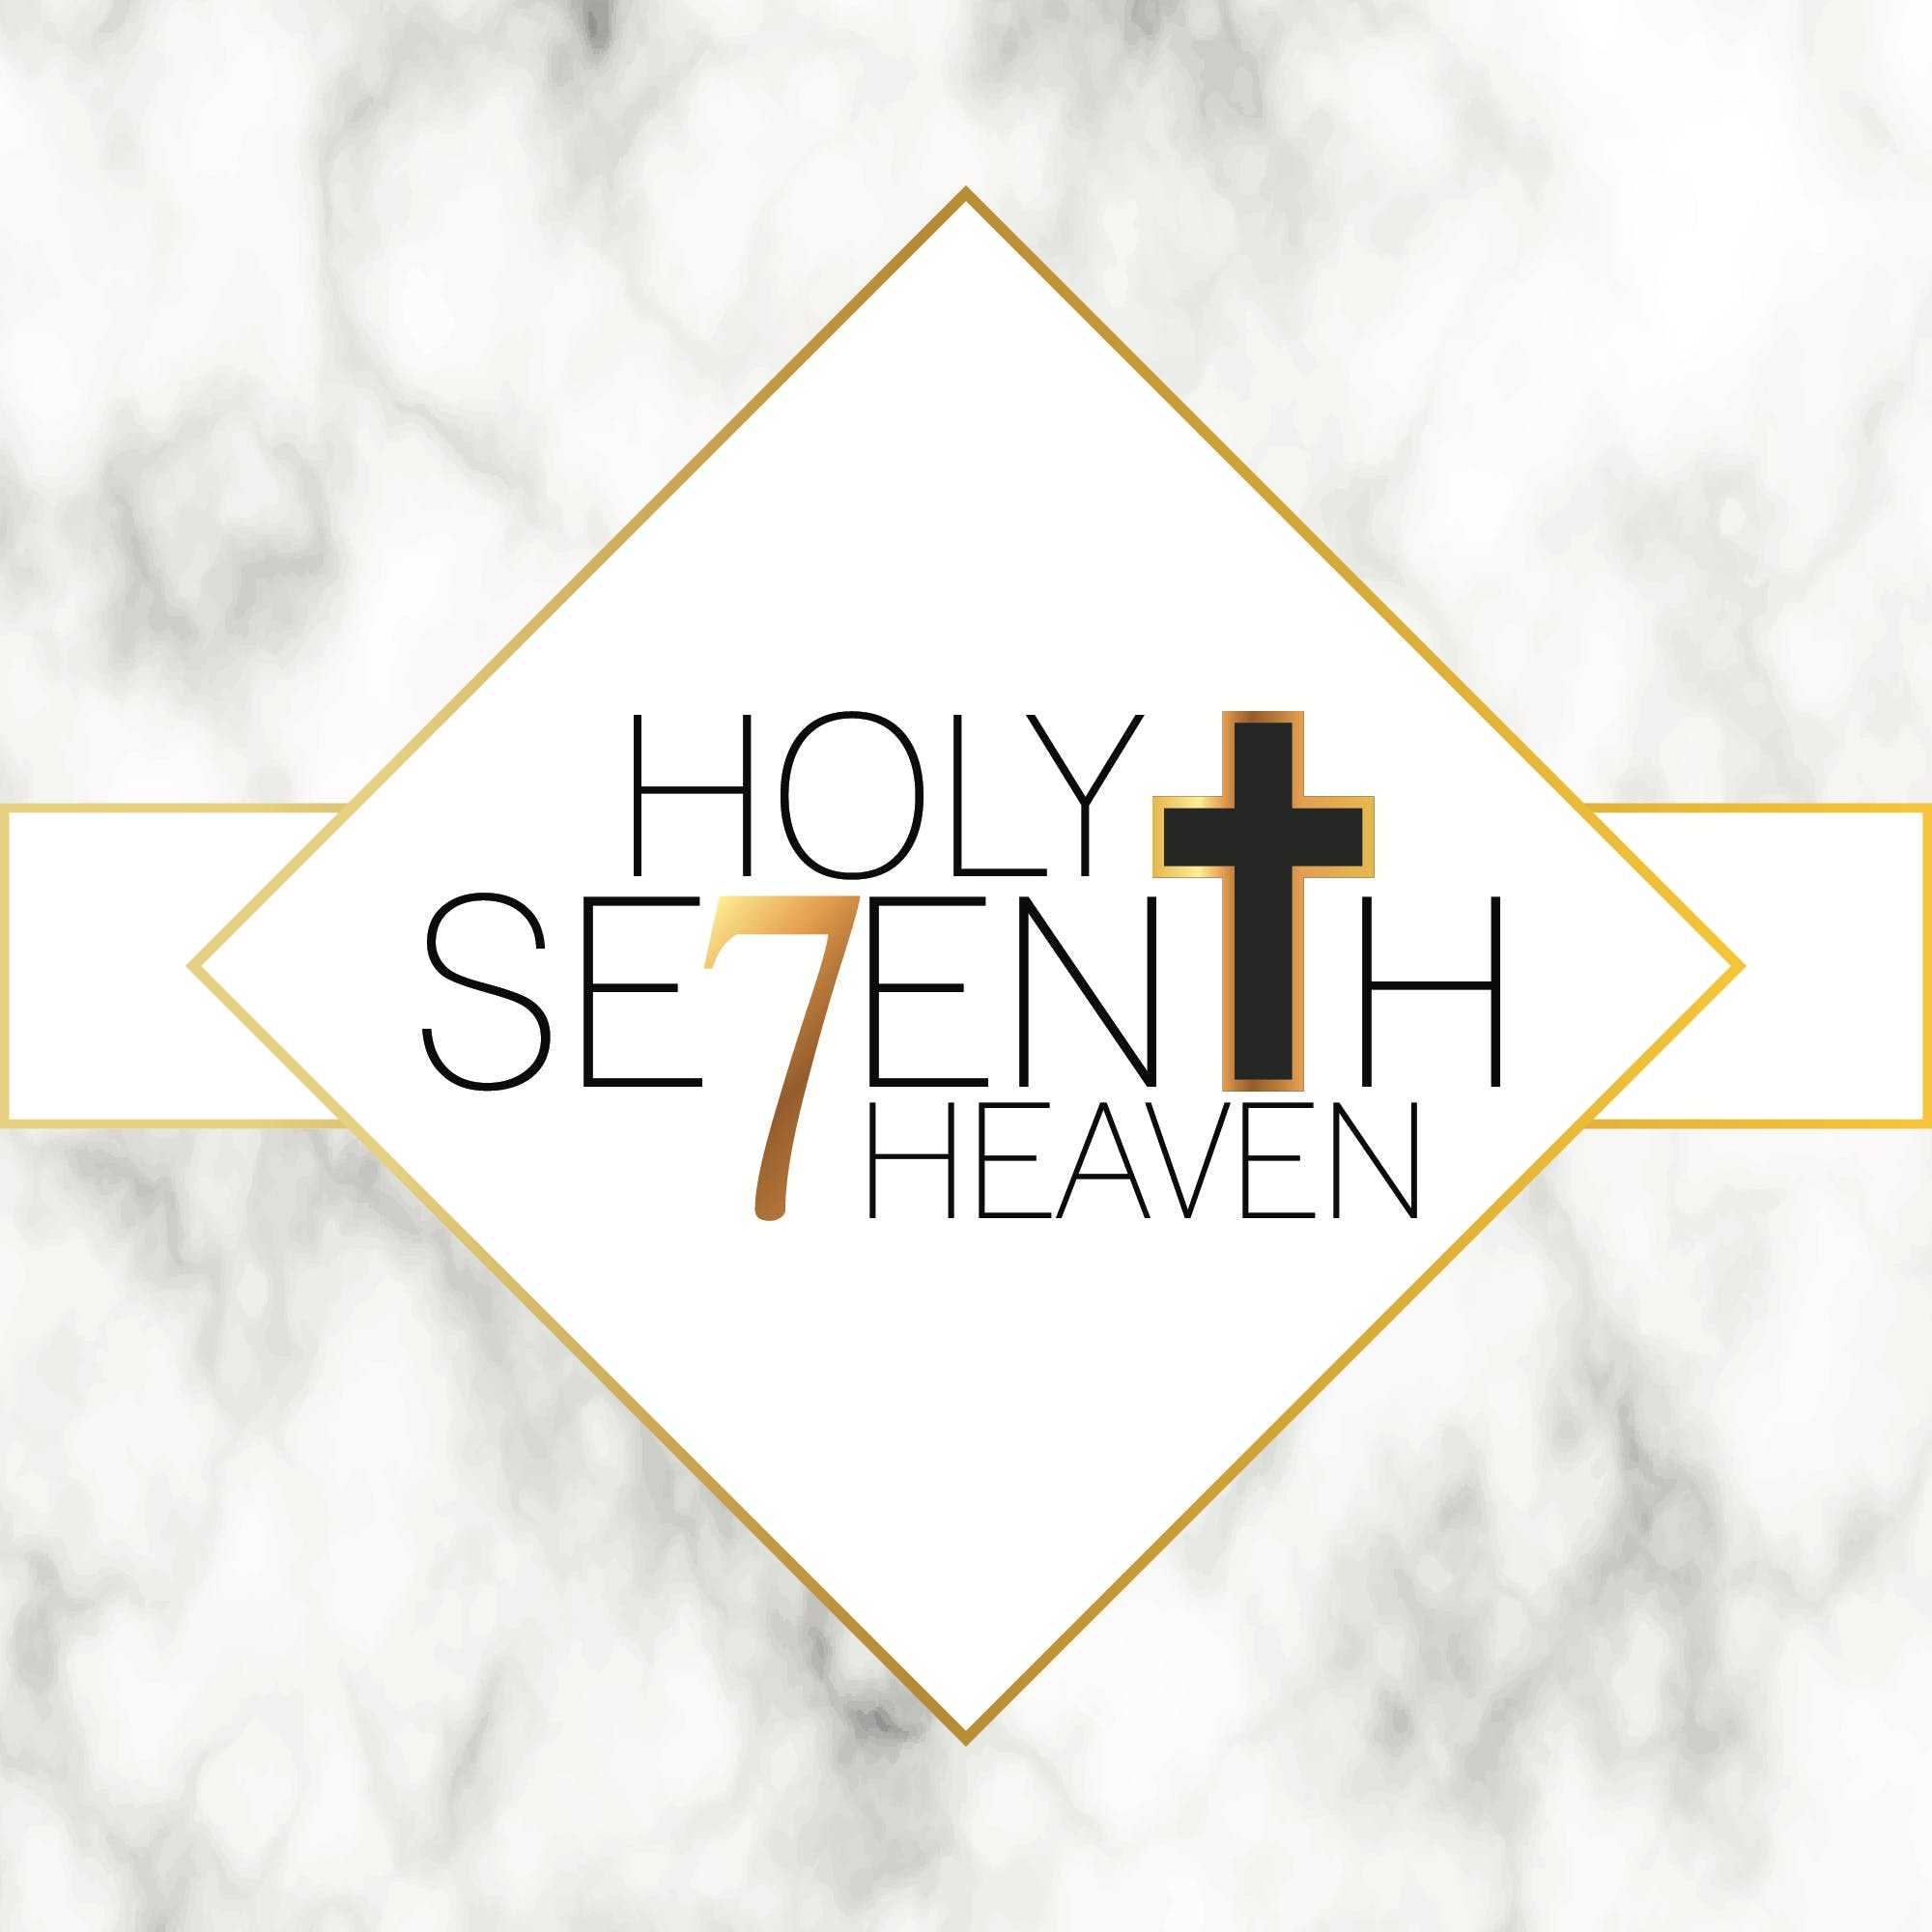 Holy 7th Heaven - Medical Marijuana Doctors - Cannabizme.com